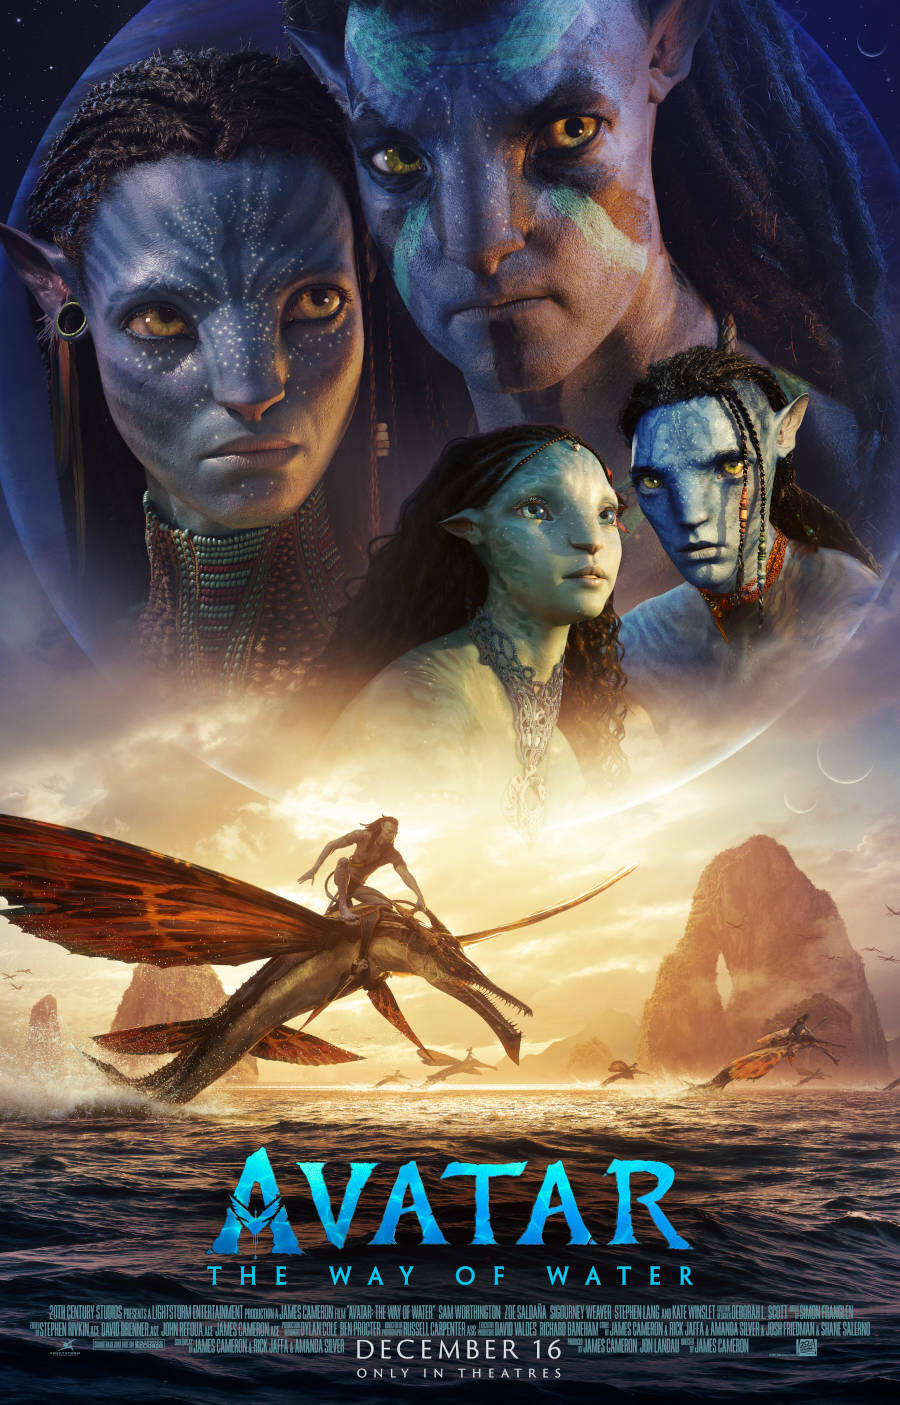 Avatar: The Way of Water (2022) - Tickets & Showtimes Near You | Fandango